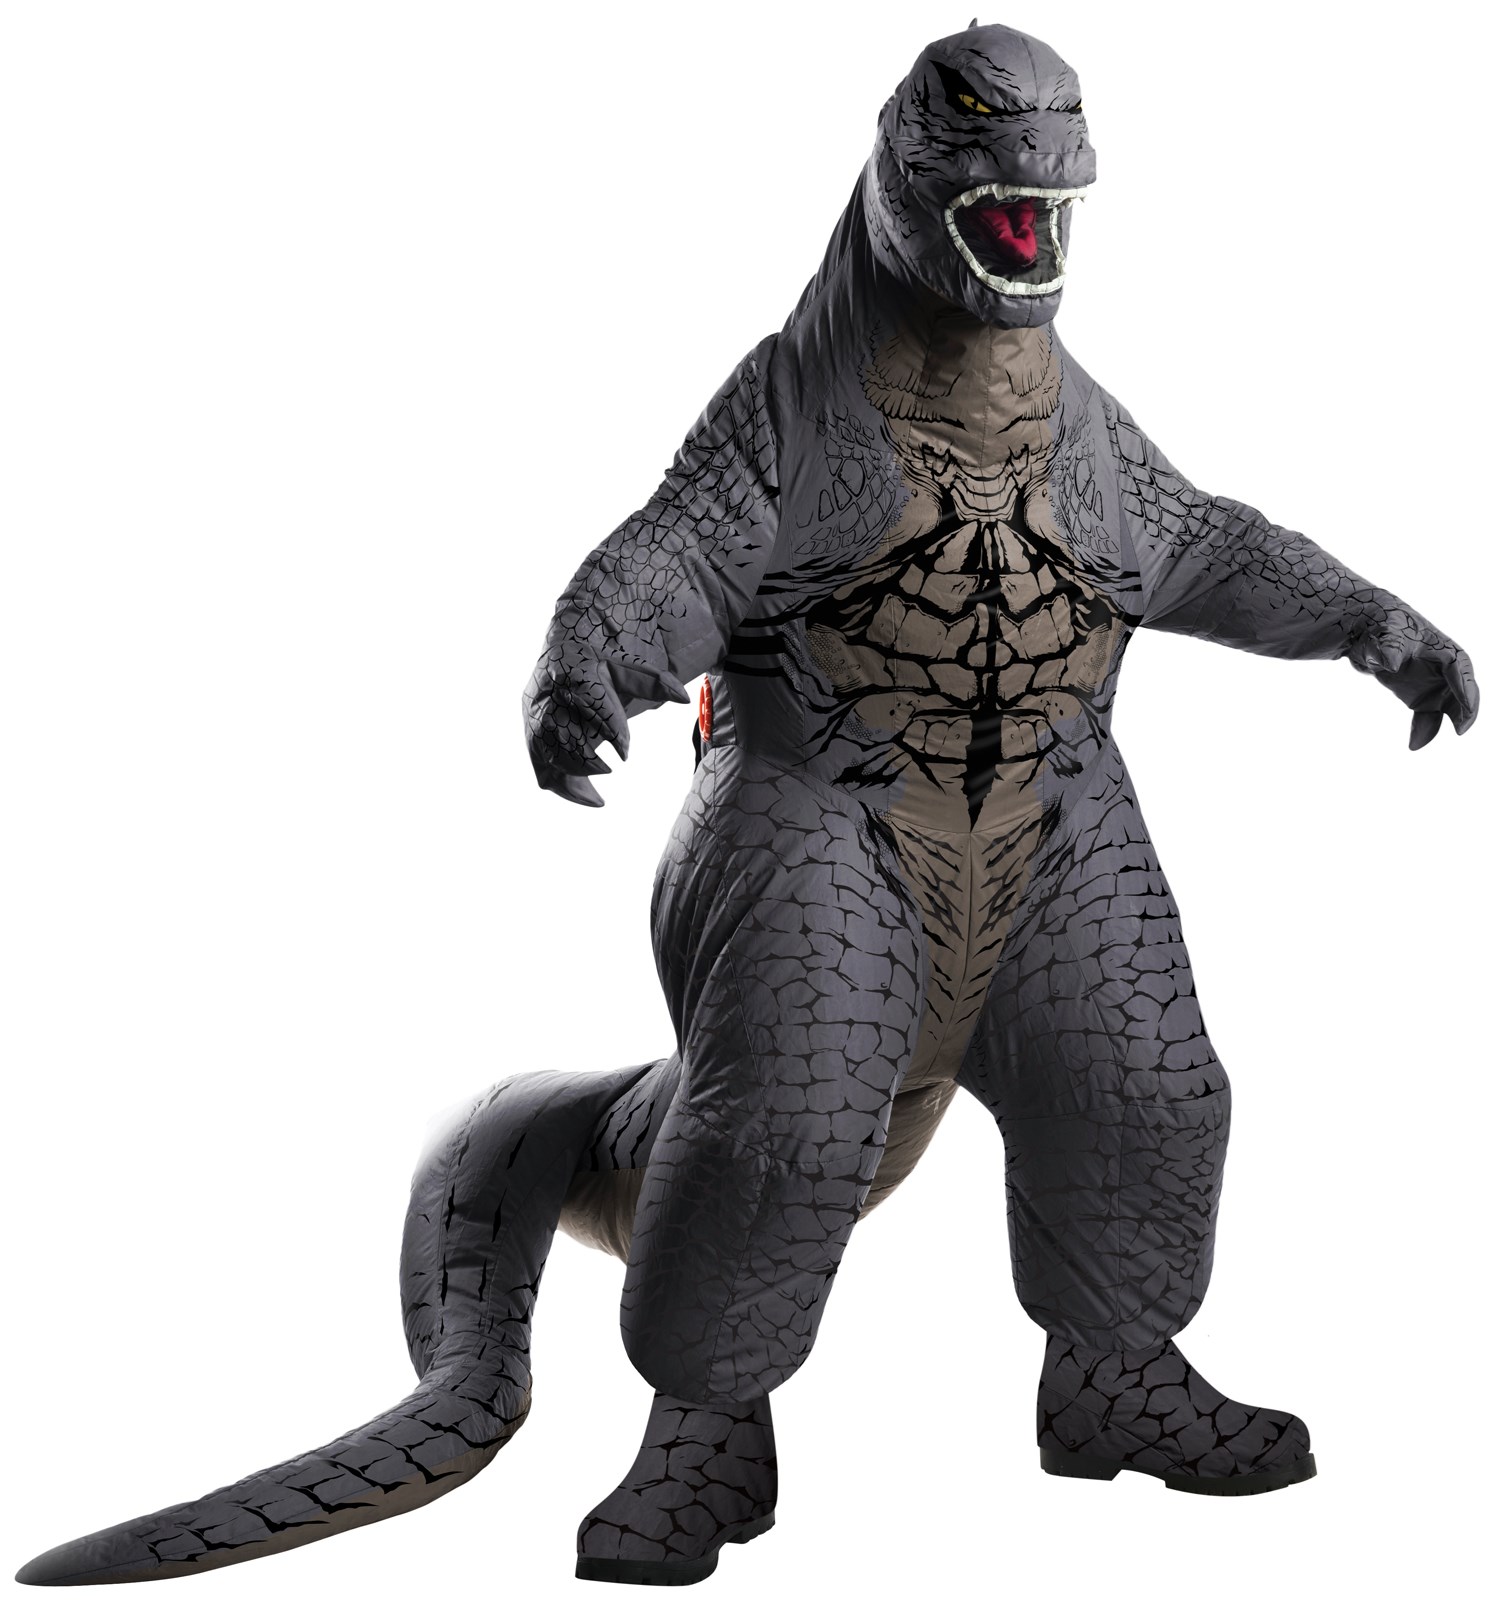 Kids Inflatable Godzilla Costume